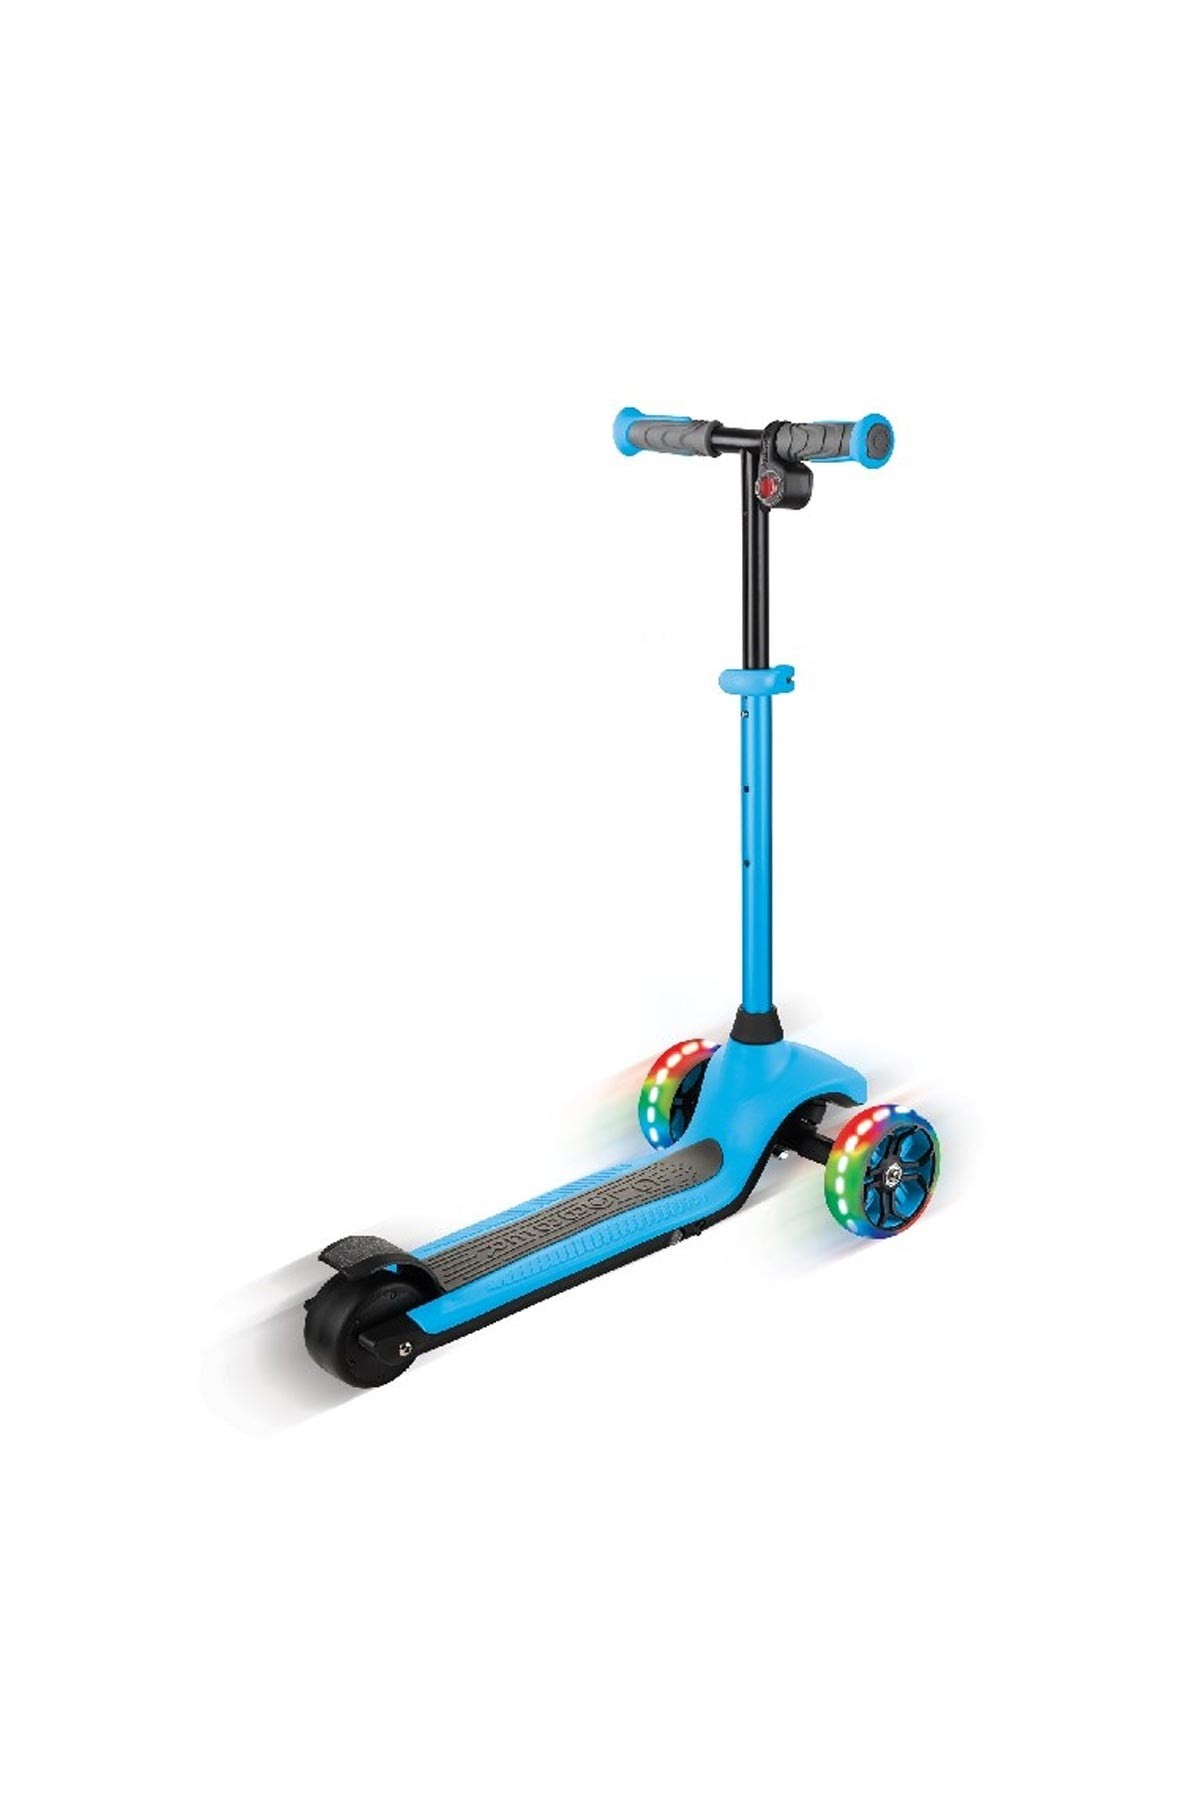 Globber Elektrikli Scooter / One K E-Motion 4 Işıklı Mavi